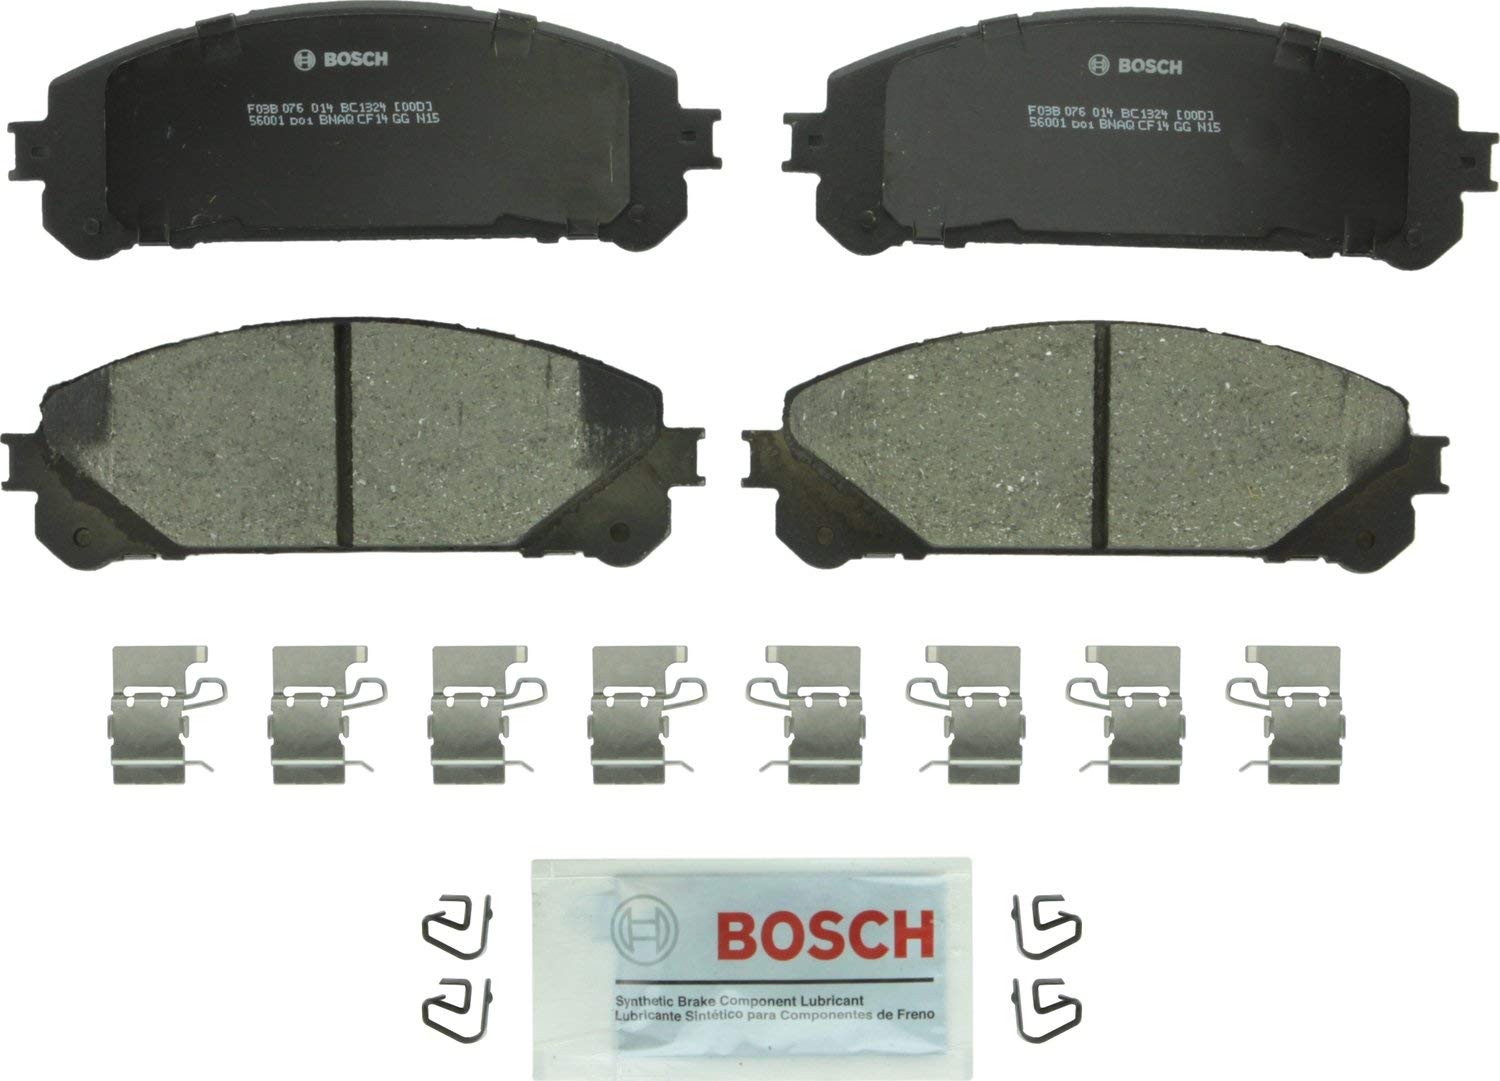 Bosch BC1324 QuietCast Premium Ceramic Disc Brake Pad Set For: Lexus NX200t, NX300h, RX350, RX450h; Toyota Highlander, Sienna, Front